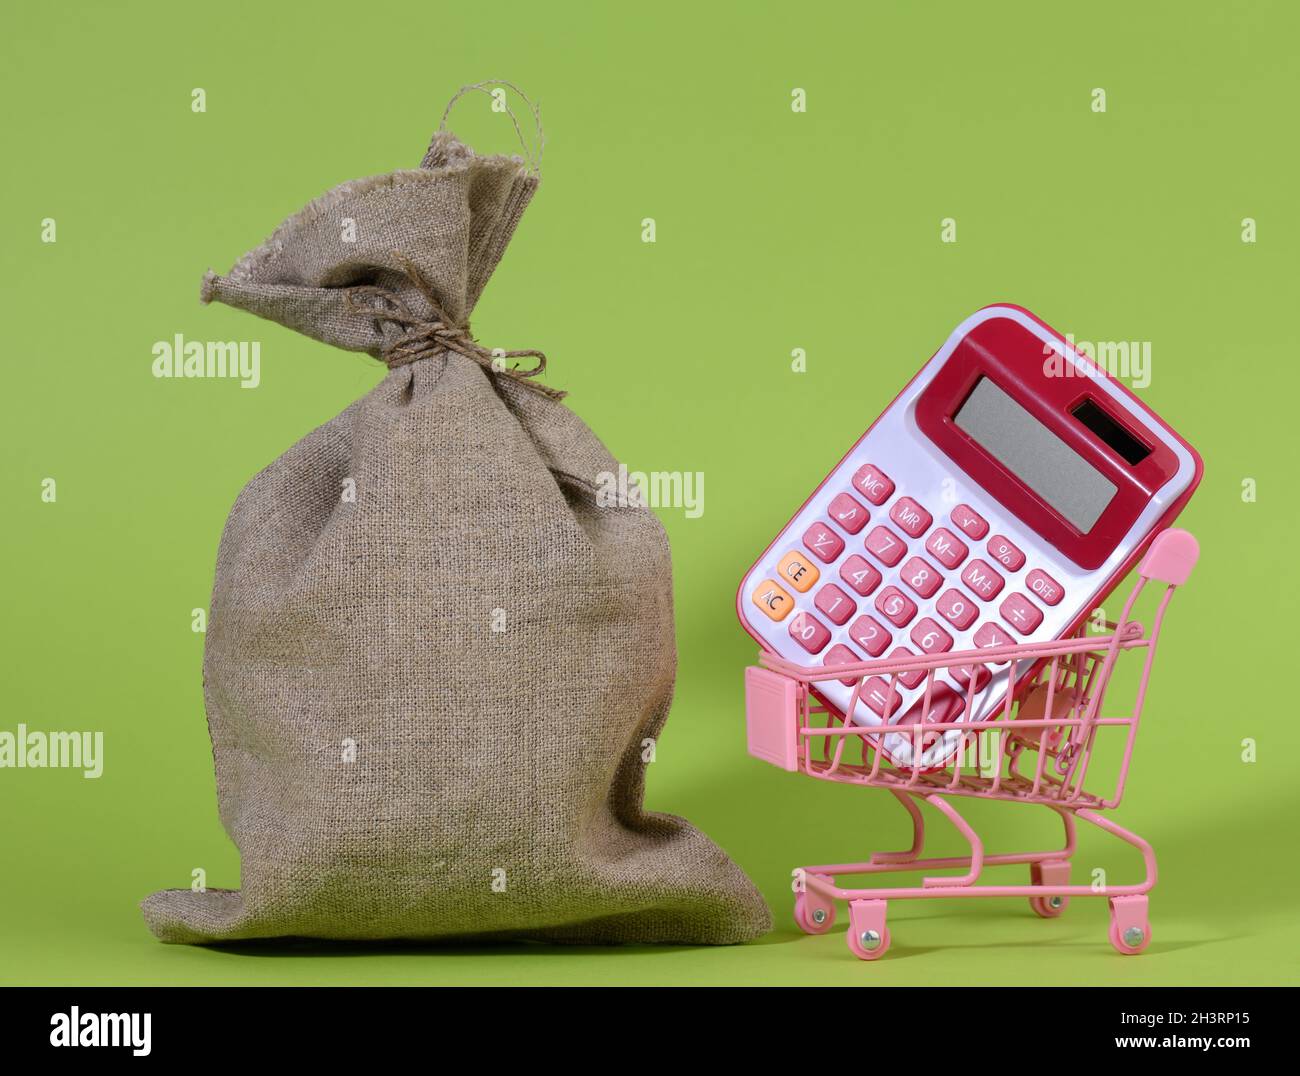 Bolsa de lona completa, calculadora de plástico rosa en un carrito de compras de metal en miniatura sobre un fondo verde Foto de stock